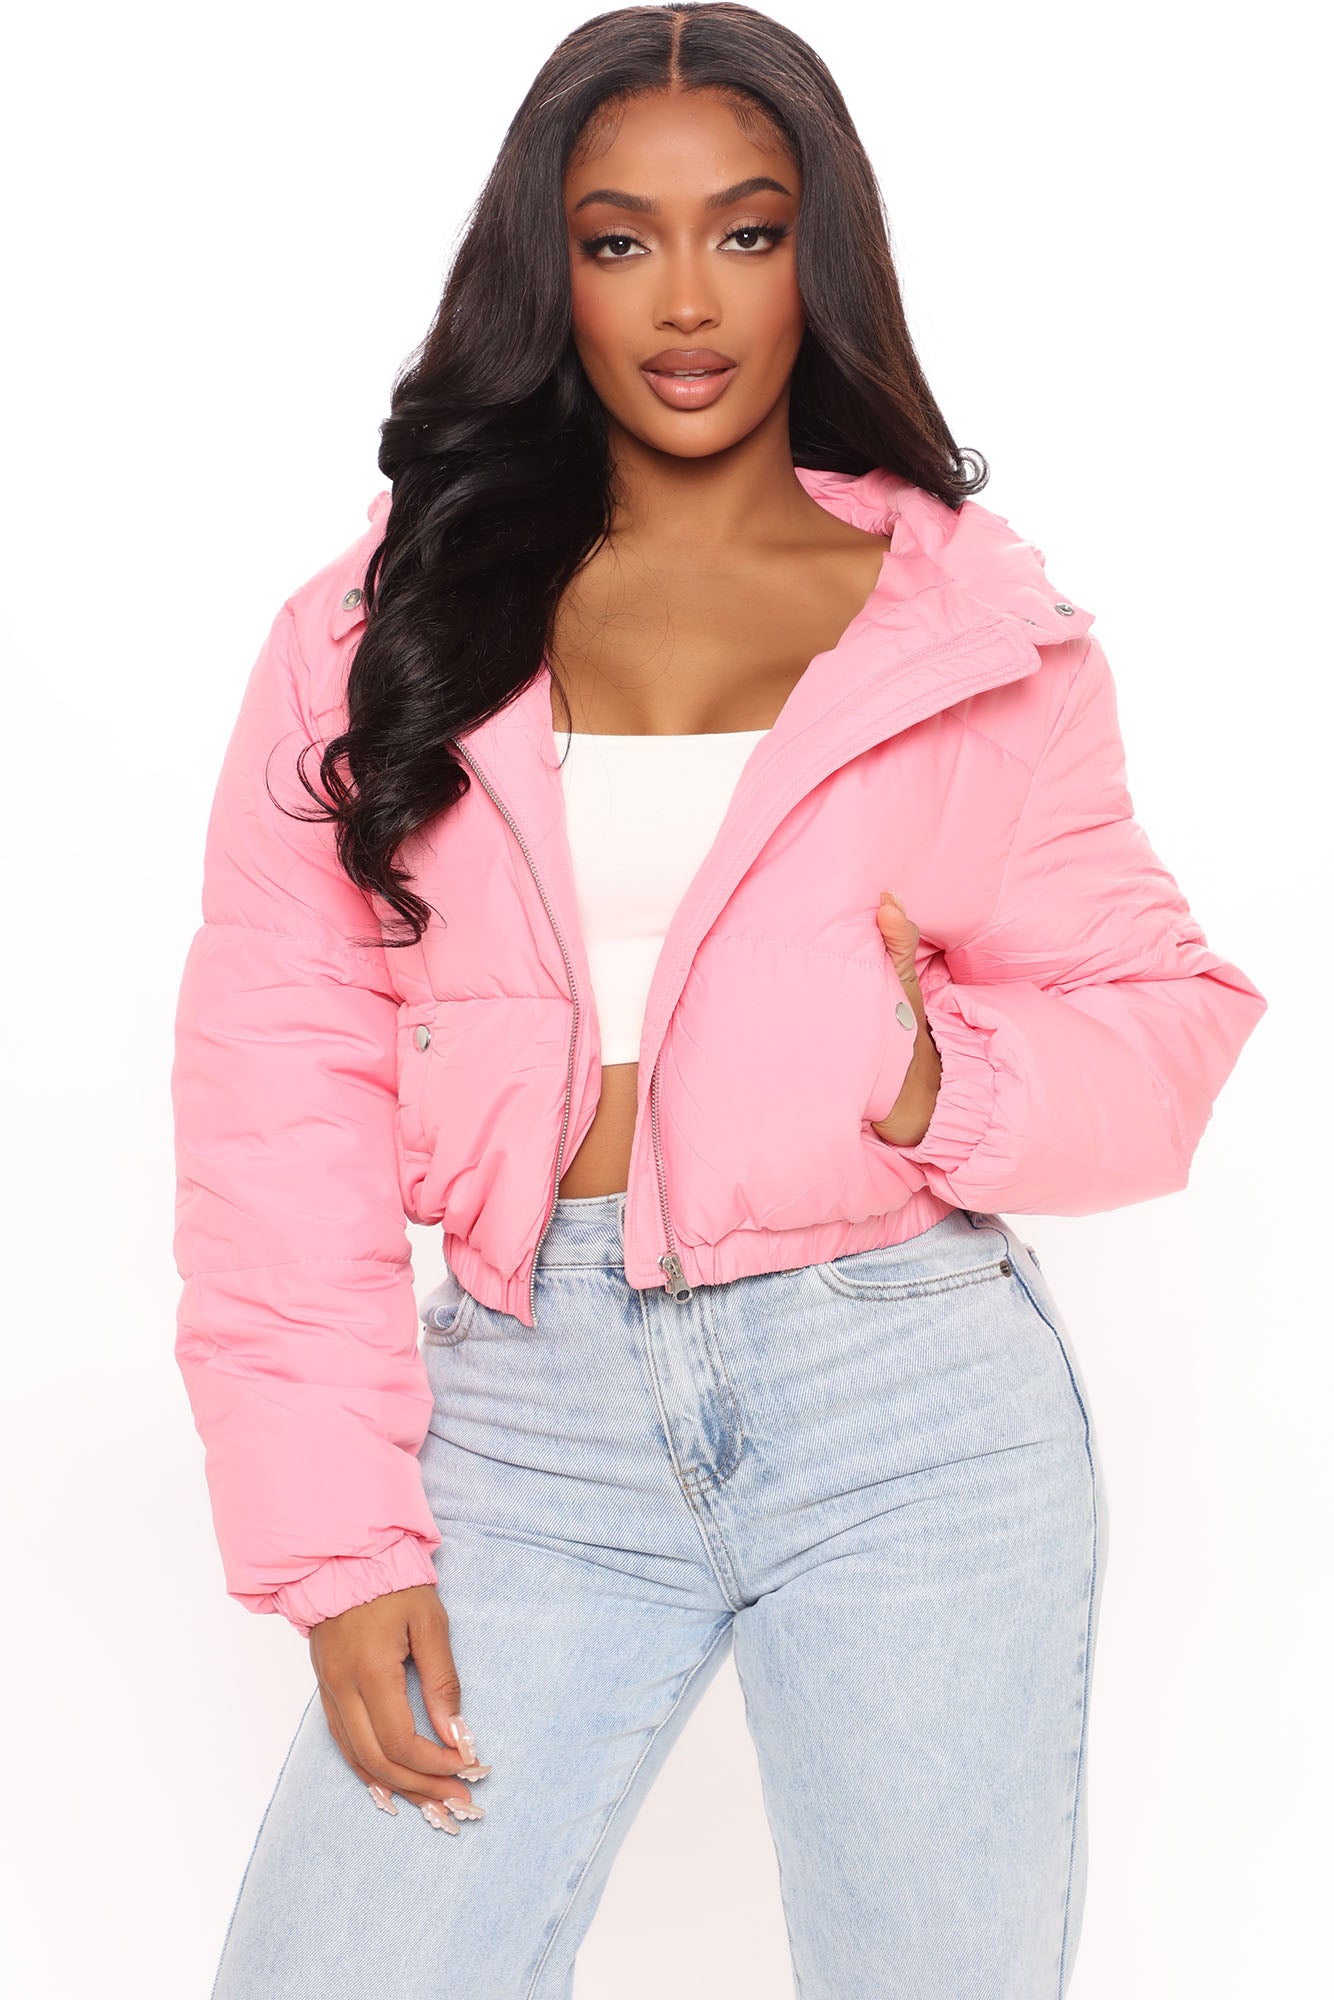 Can't Be Beat Cropped Puffer Jacket - Pink, Fashion Nova, Jackets & Coats